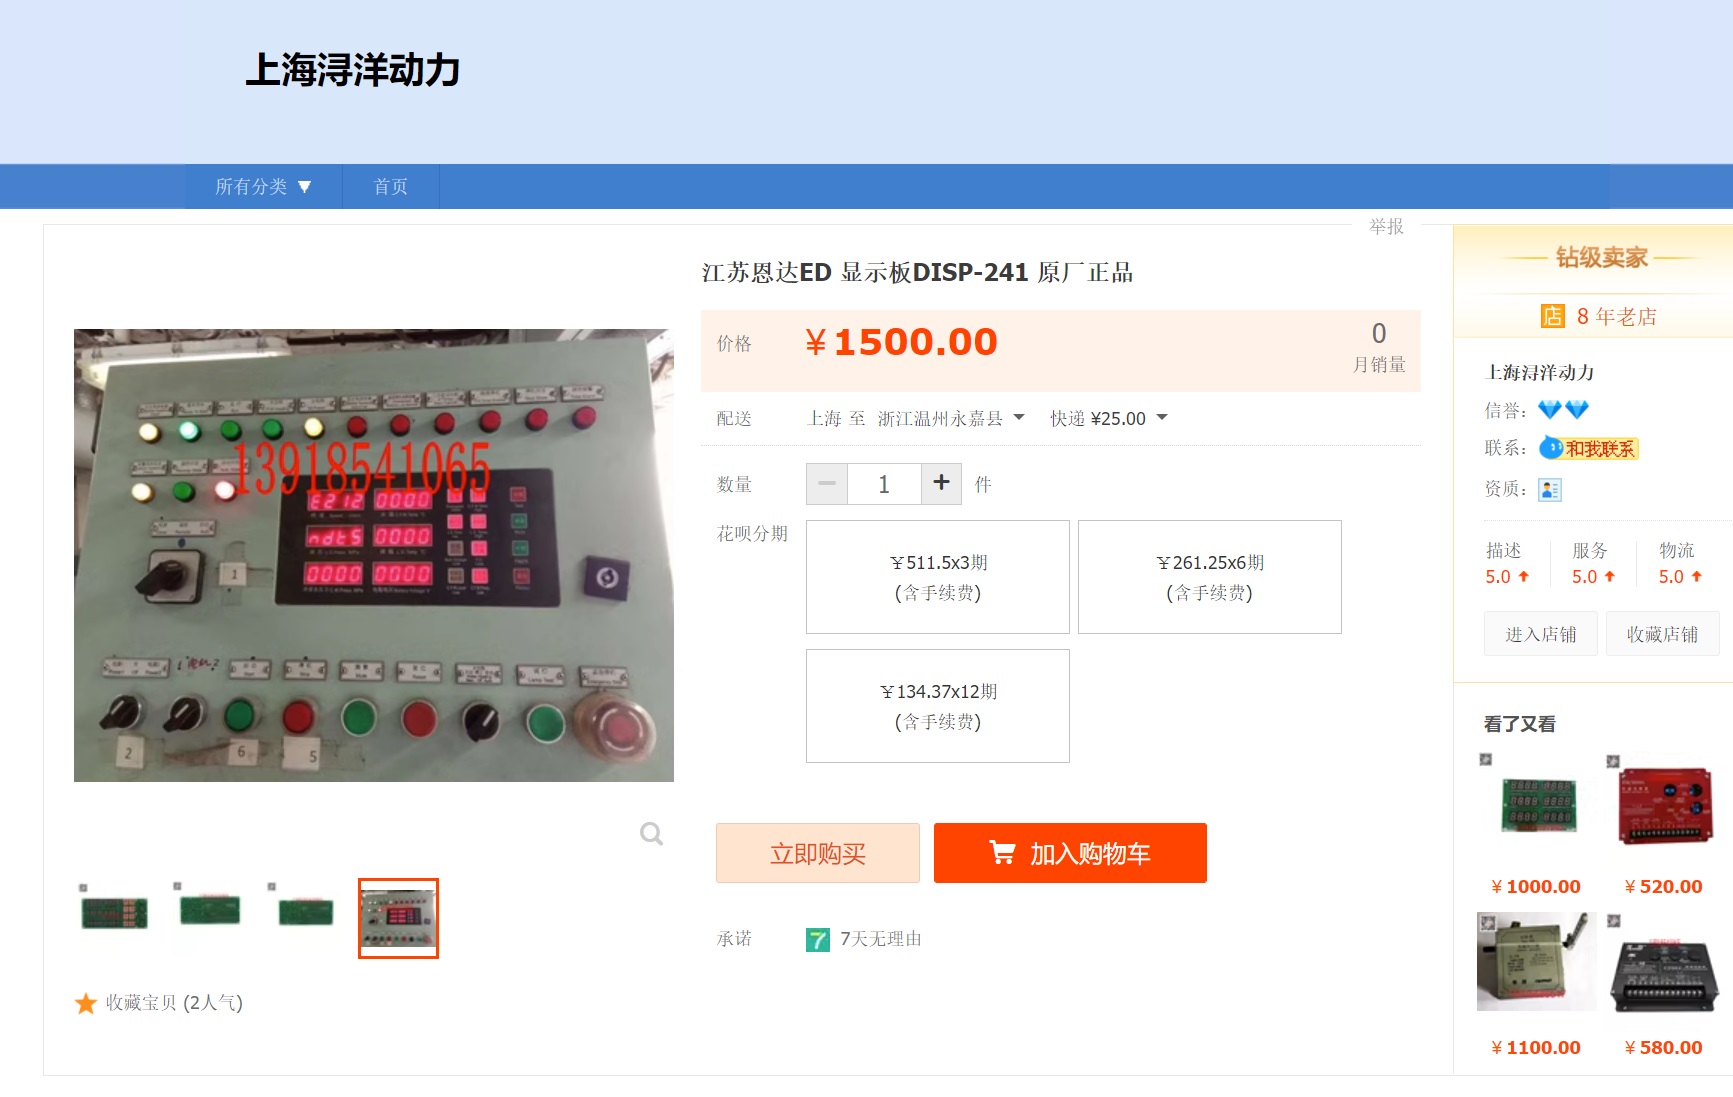 Jiangsu Enda Ed Display Board DISP-241 Is A Genuine Product From The Original Factory